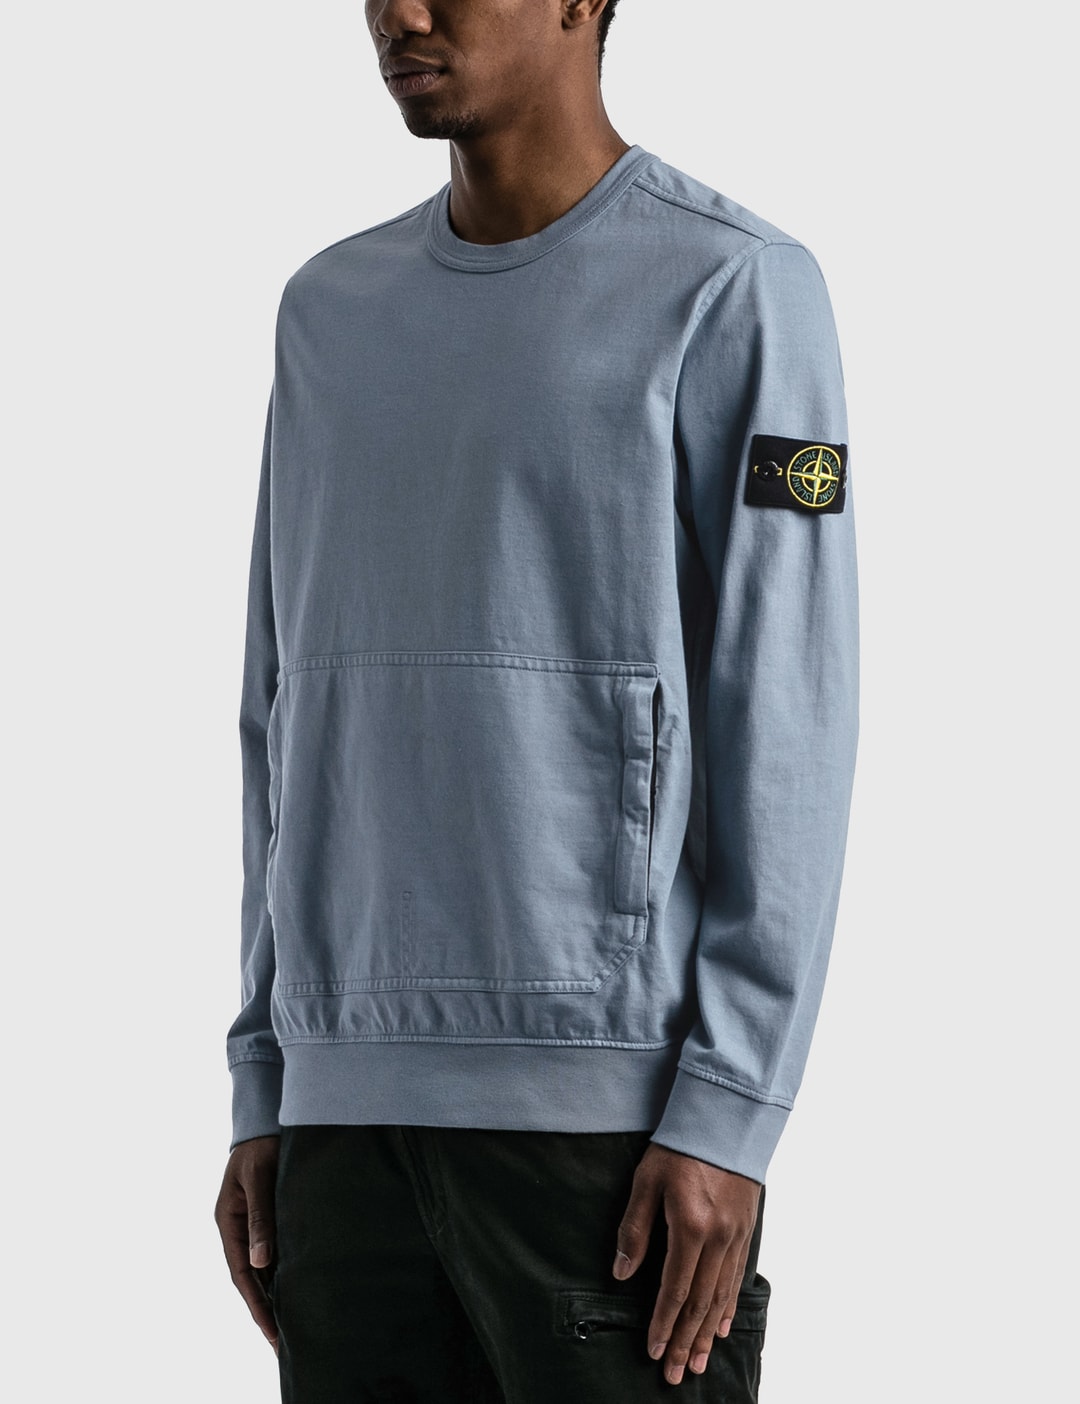 Stone Island - Sweatshirt With Pocket | HBX - Globally Curated Fashion ...